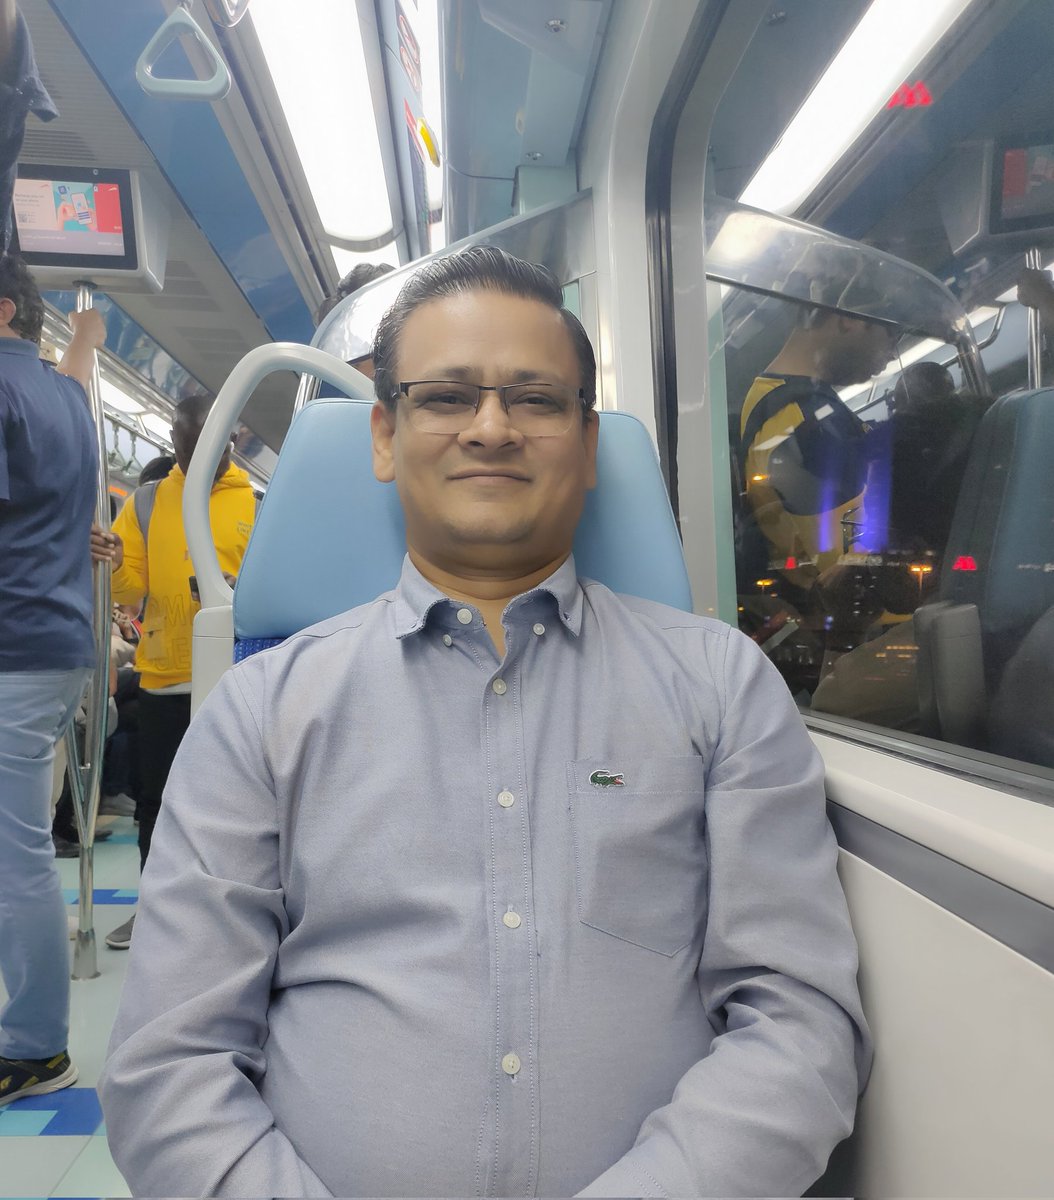 Dubai Metro...🇦🇪
#RajnitKumar #RupaliRajnit #MyExpression  #LoveMyHome #Life #ALovePoet #राजनीतकुमार  #ABeautifulDay #Family #UniqueUAE #DazzlingDubai #DubaiMetro #DMCC